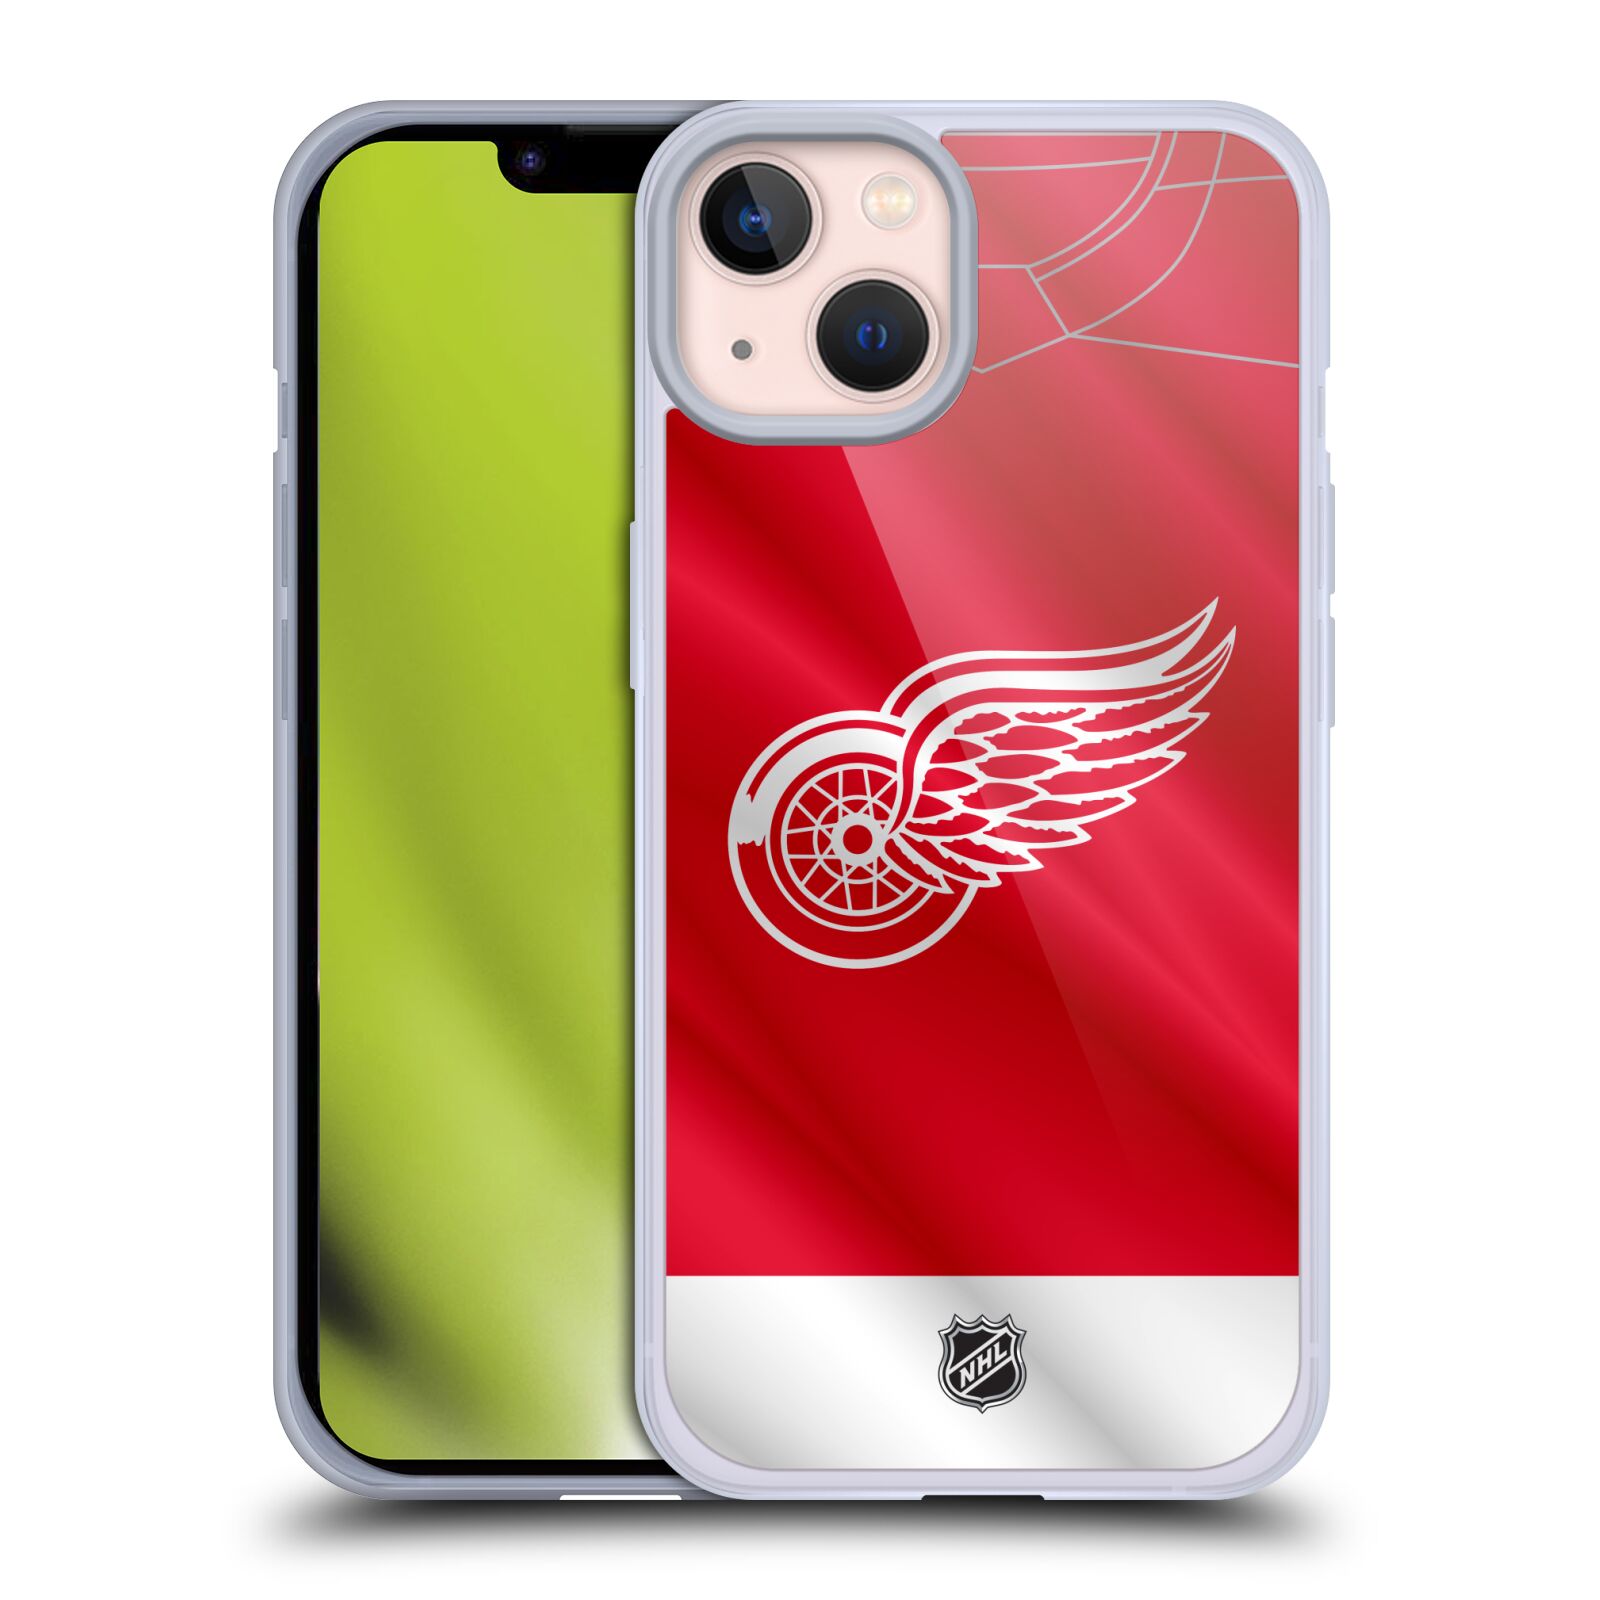 Silikonové pouzdro na mobil Apple iPhone 13 - NHL - Dres Detroit Red Wings (Silikonový kryt, obal, pouzdro na mobilní telefon Apple iPhone 13 s licencovaným motivem NHL - Dres Detroit Red Wings)